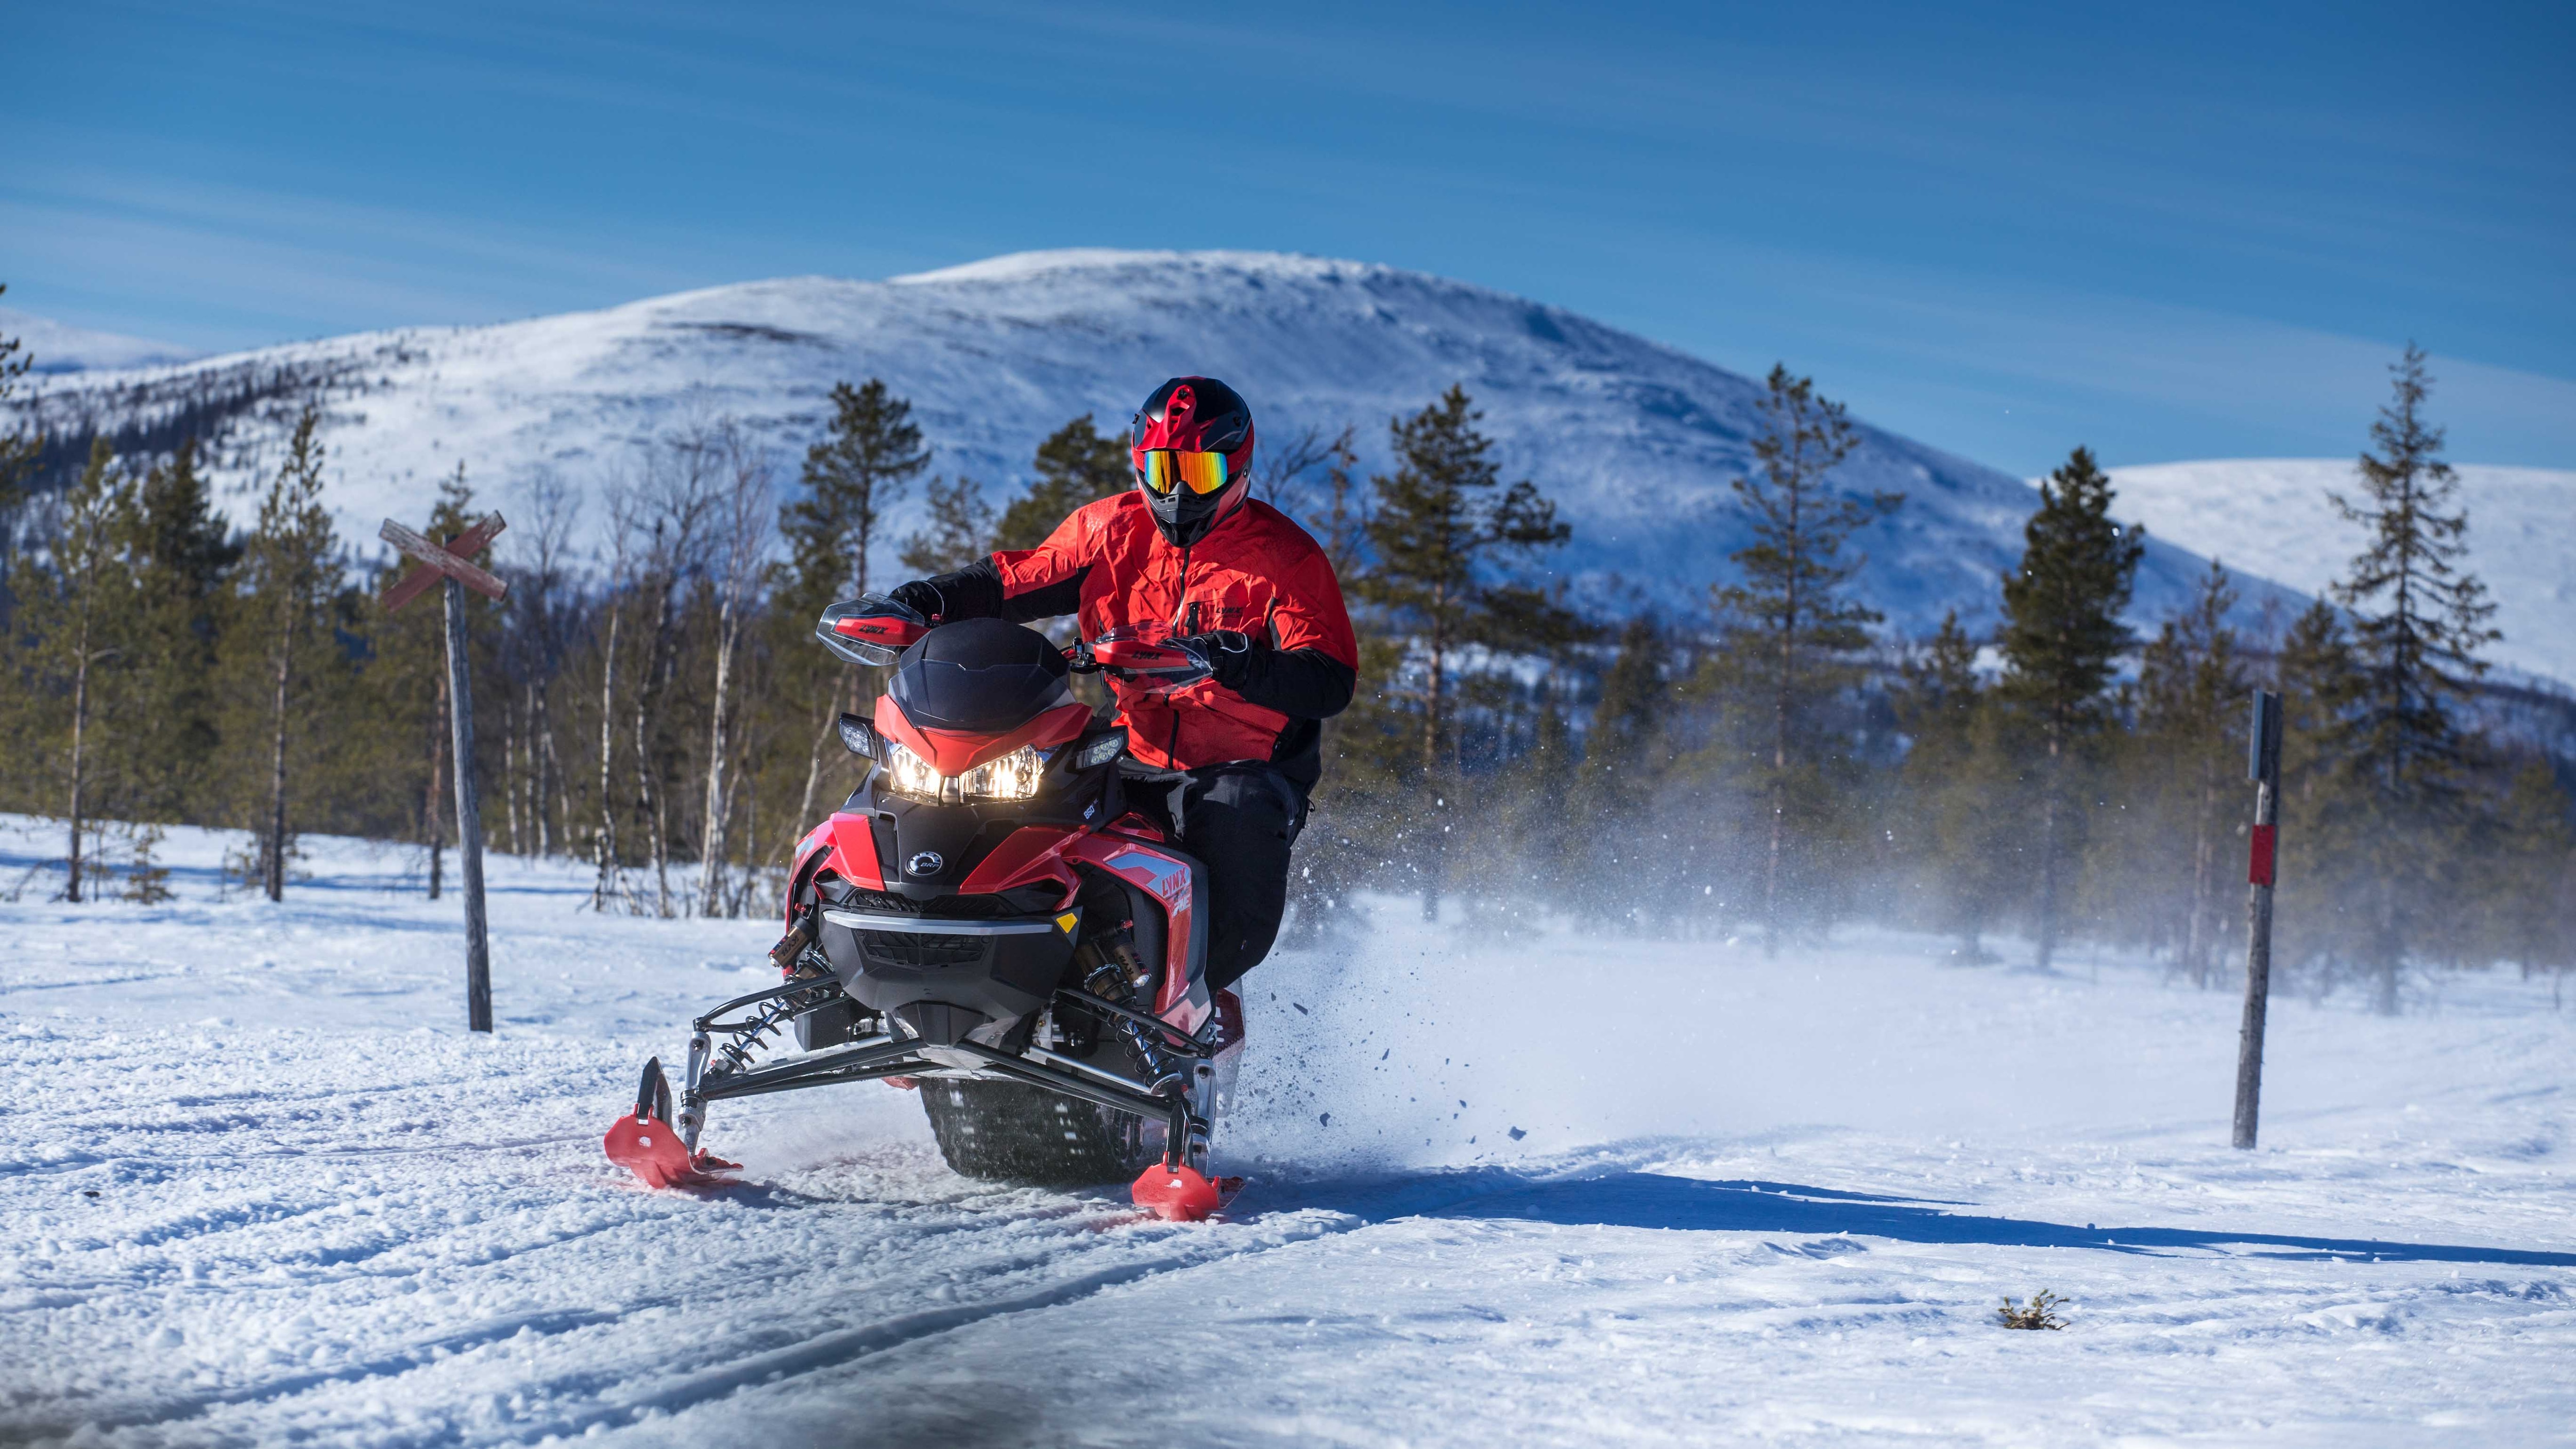 Football player Sami Hyypiä Lynx snowmobile riding on trail with mountain view